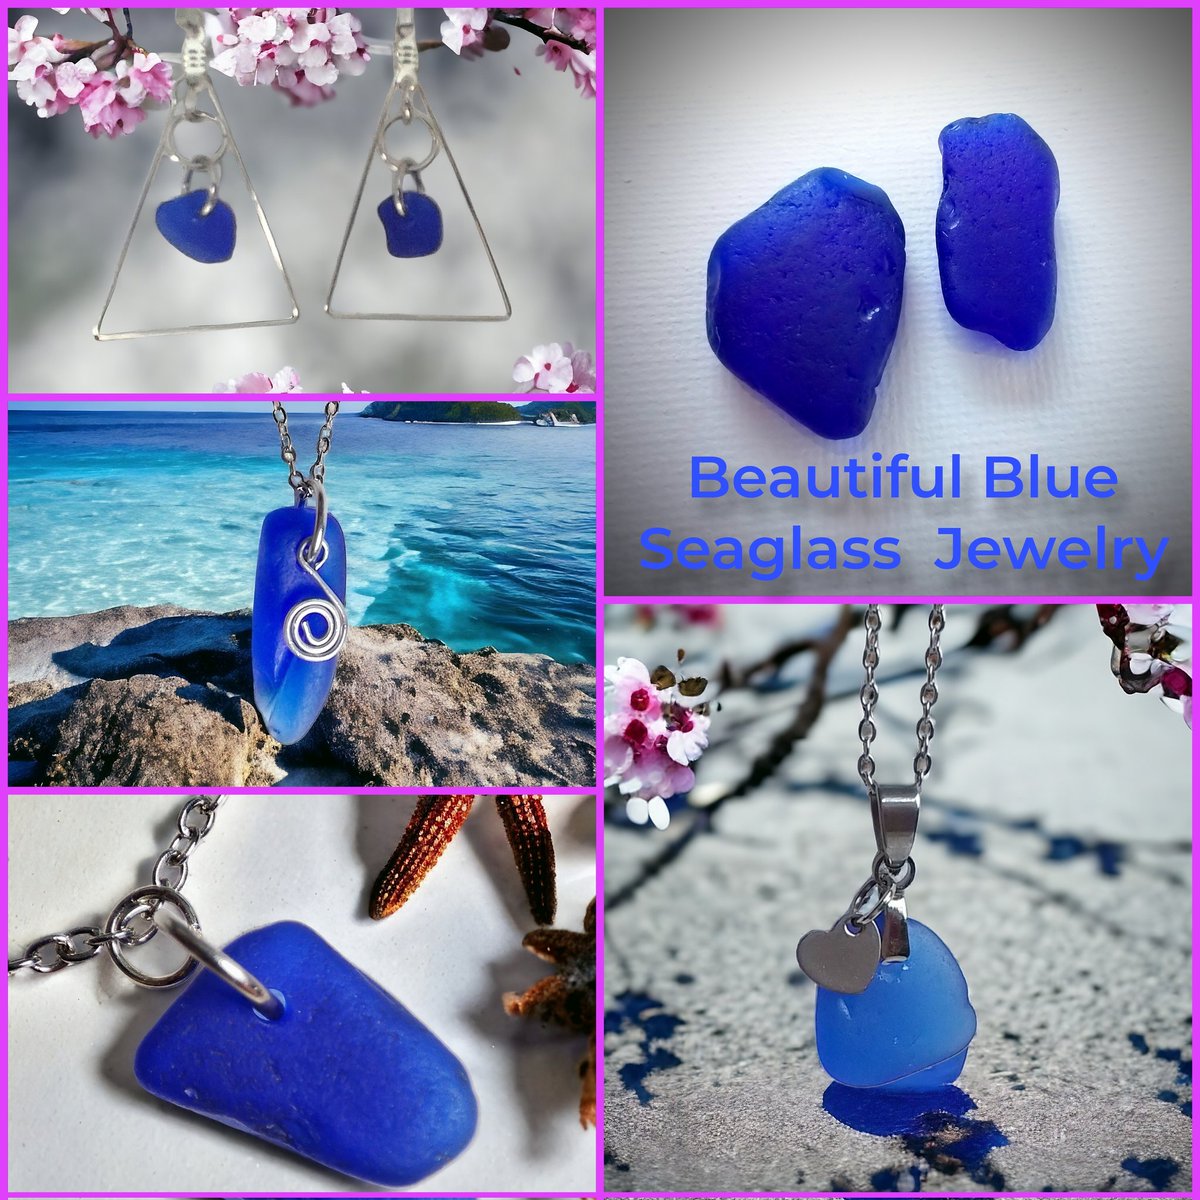 Beautiful blue x 💙 hope you're having a wonderful bank holiday x
Twistedthreadsukshop.etsy.com #jewelry #seaglass #gifts #spirituality